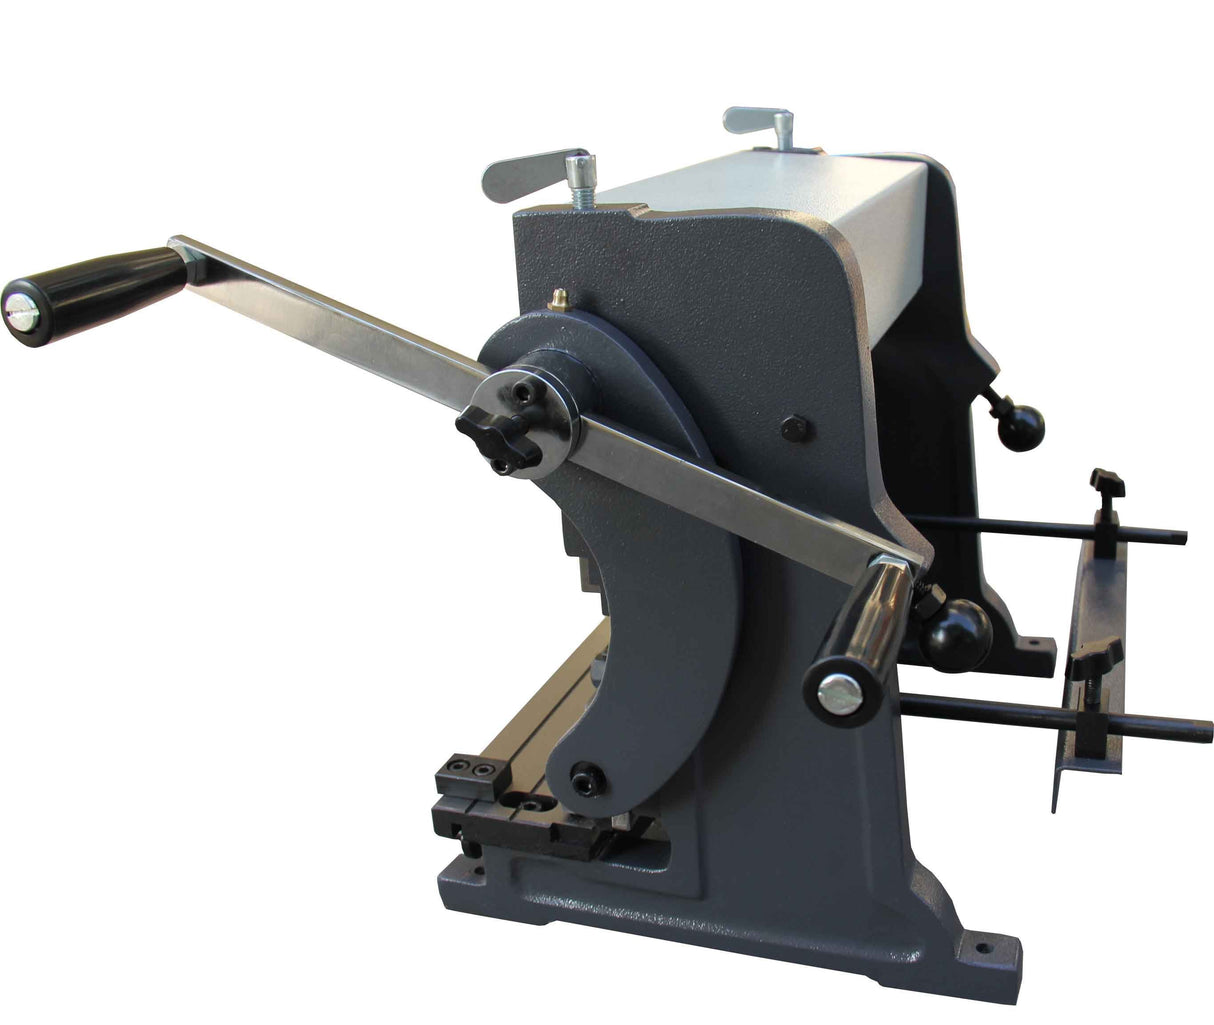 <transcy>3-IN-1/12 3 in 1 Combined Manual Machine: 12 &quot;(30 cm.) Sheet Cutter, Bender and Roller</transcy>